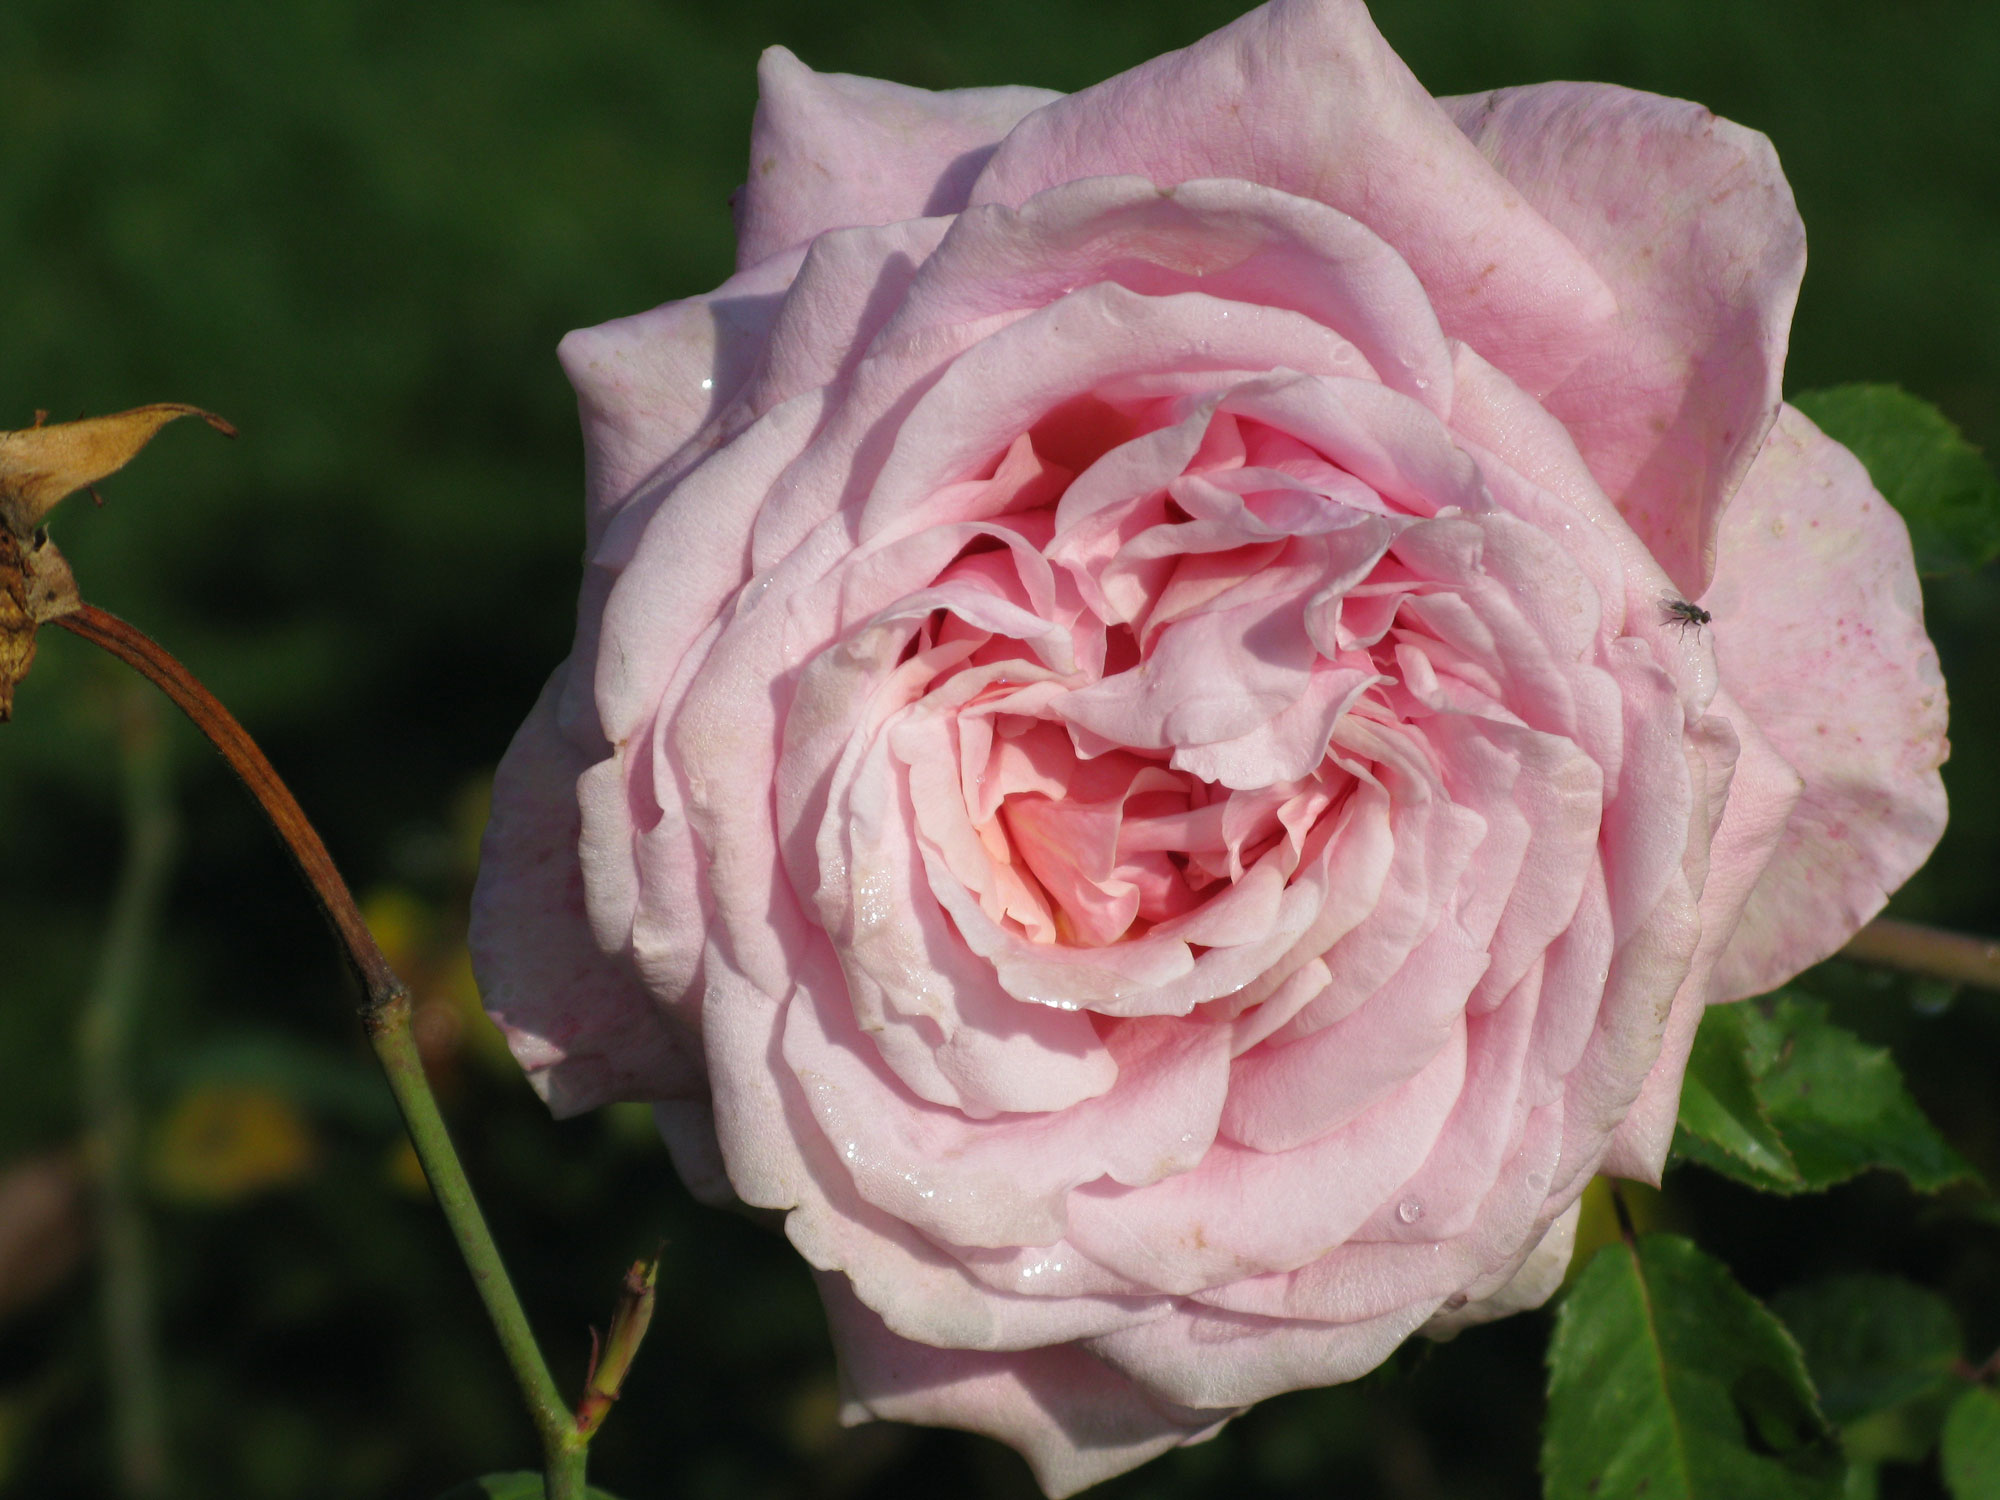 Magic Kingdom - Rose in Garden